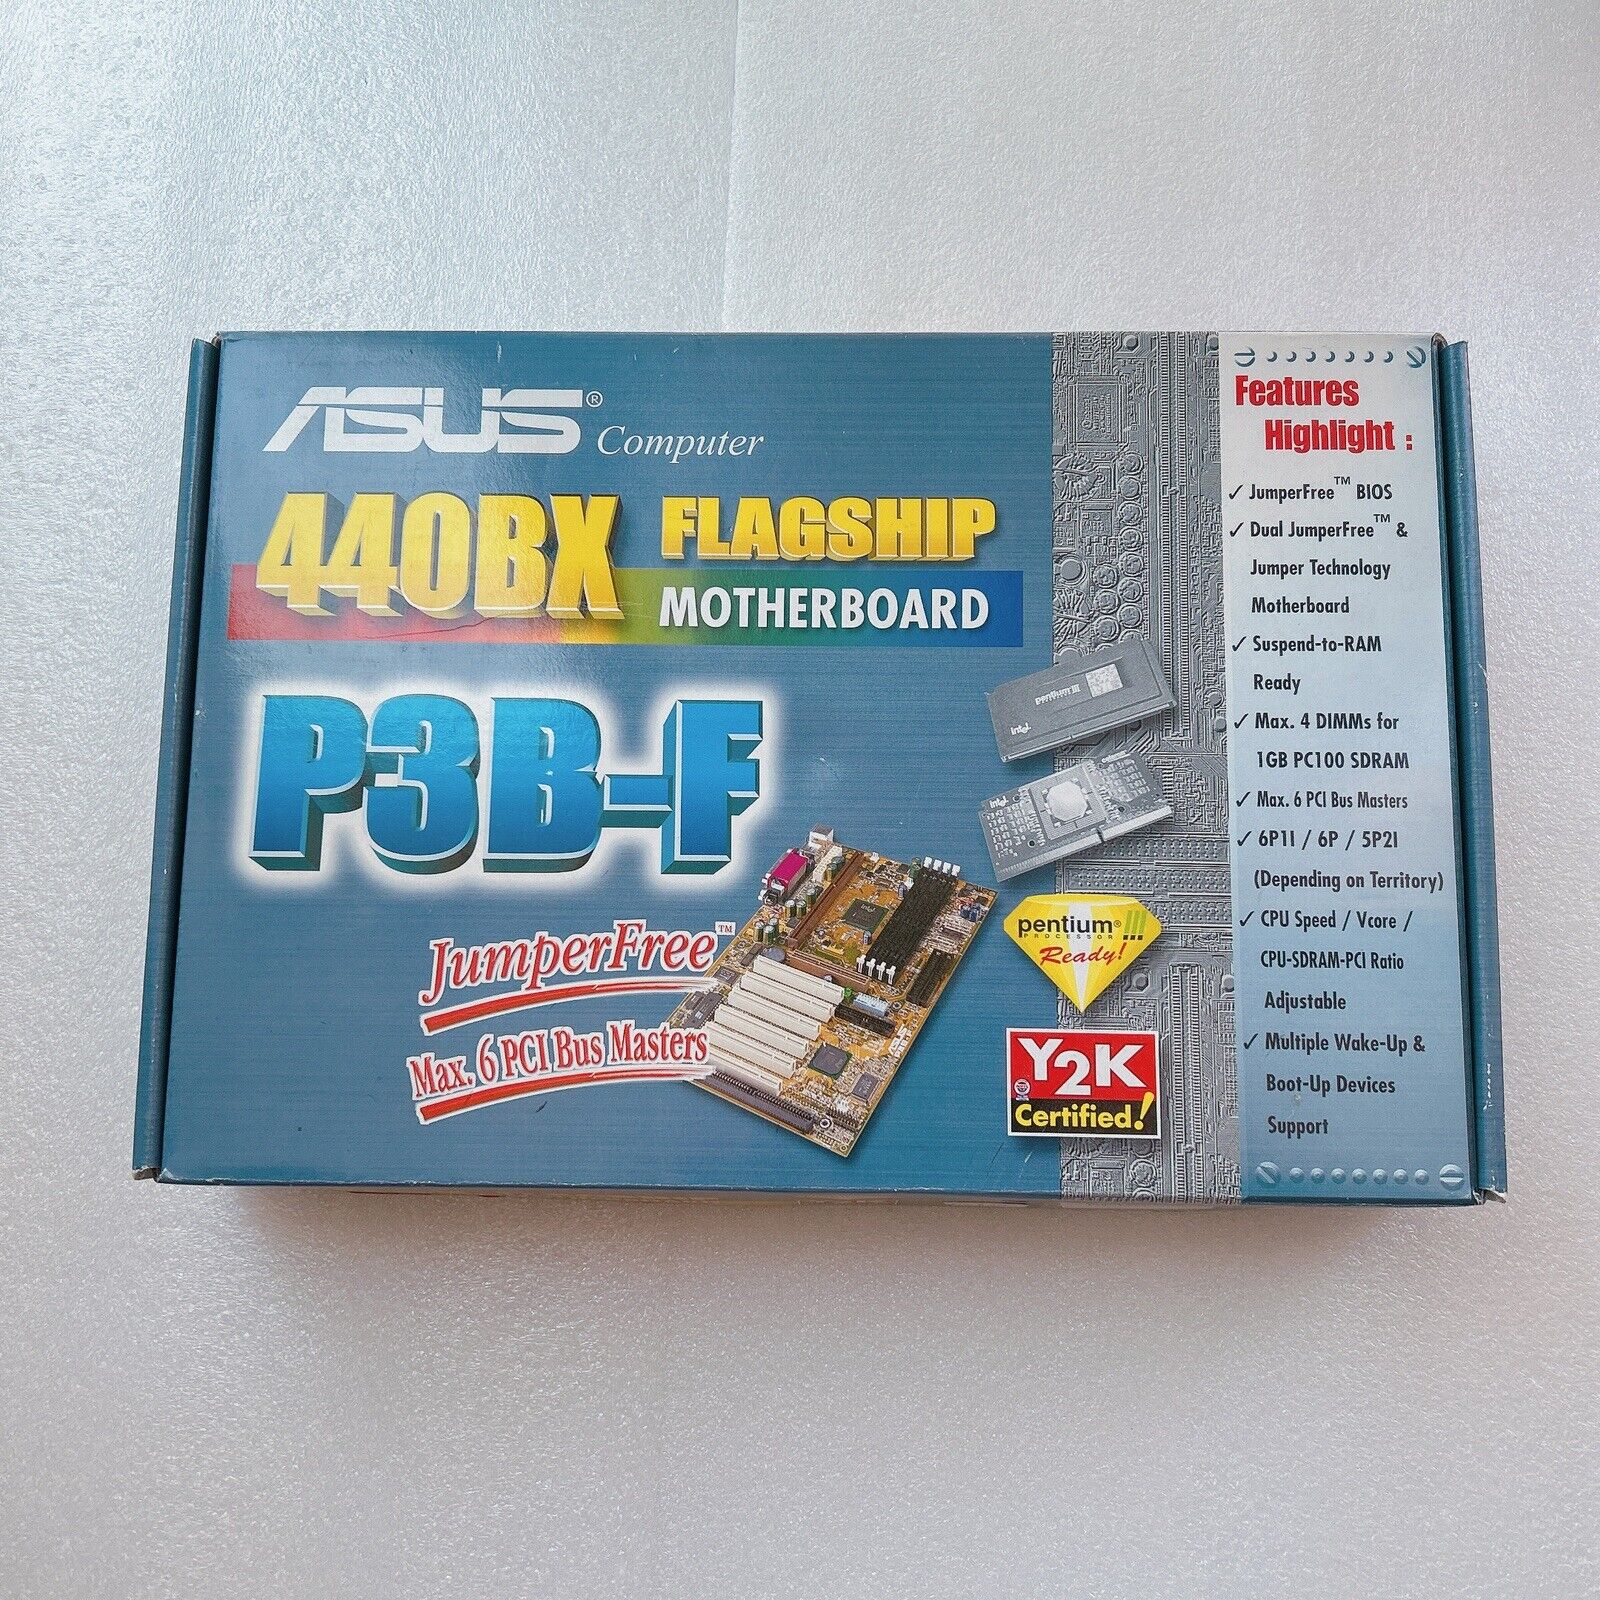 Original BOX for ASUS P3B-F, Slot 1, Intel Motherboard 440BX FLAGSHIP